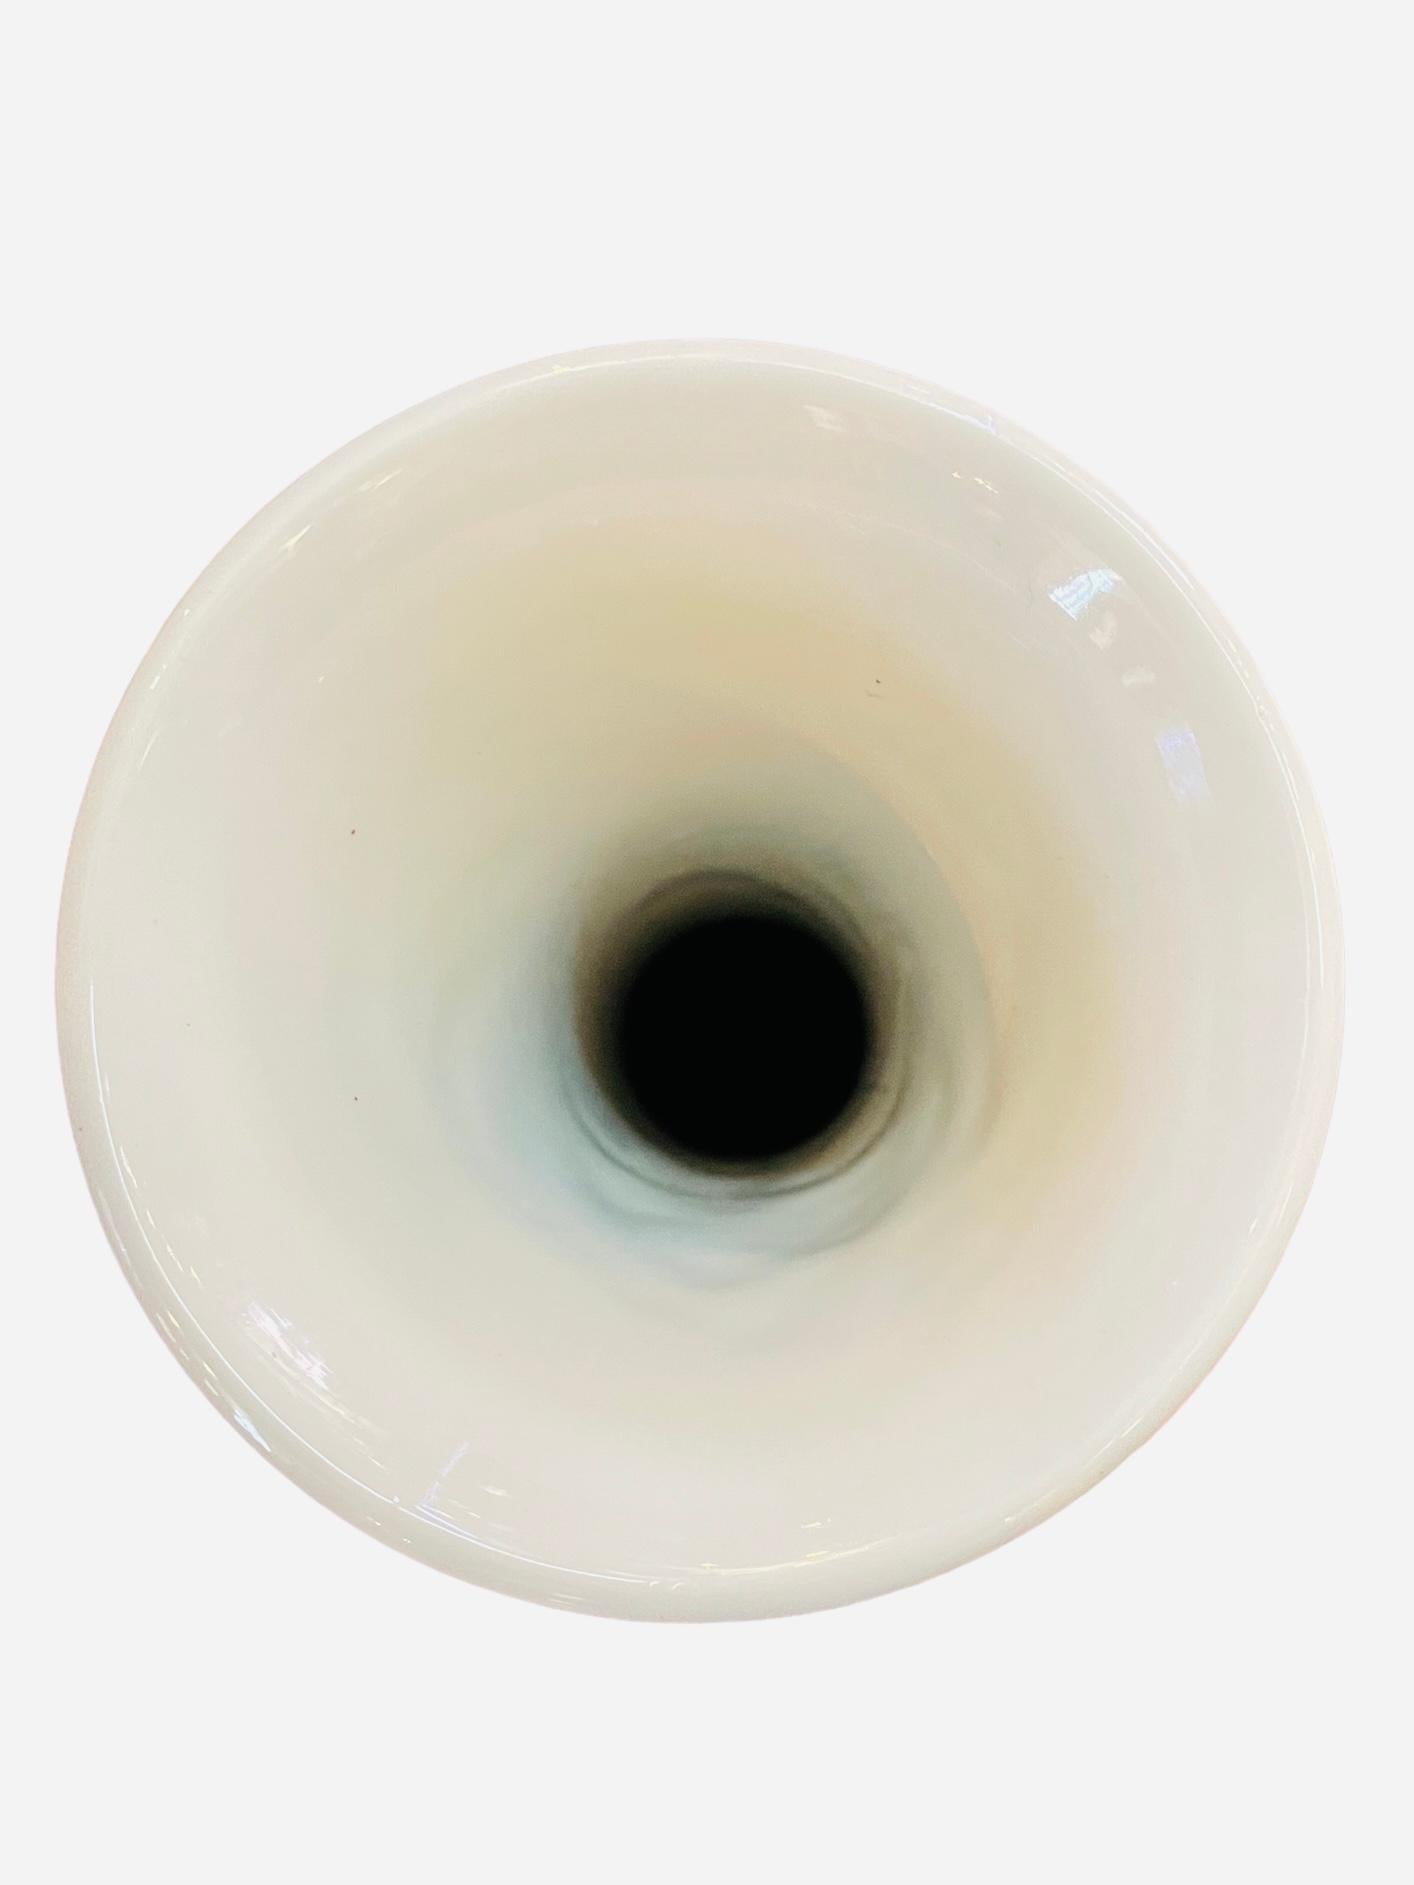 Japonisme 20th Century Lladro Porcelain Gourd Vase For Sale